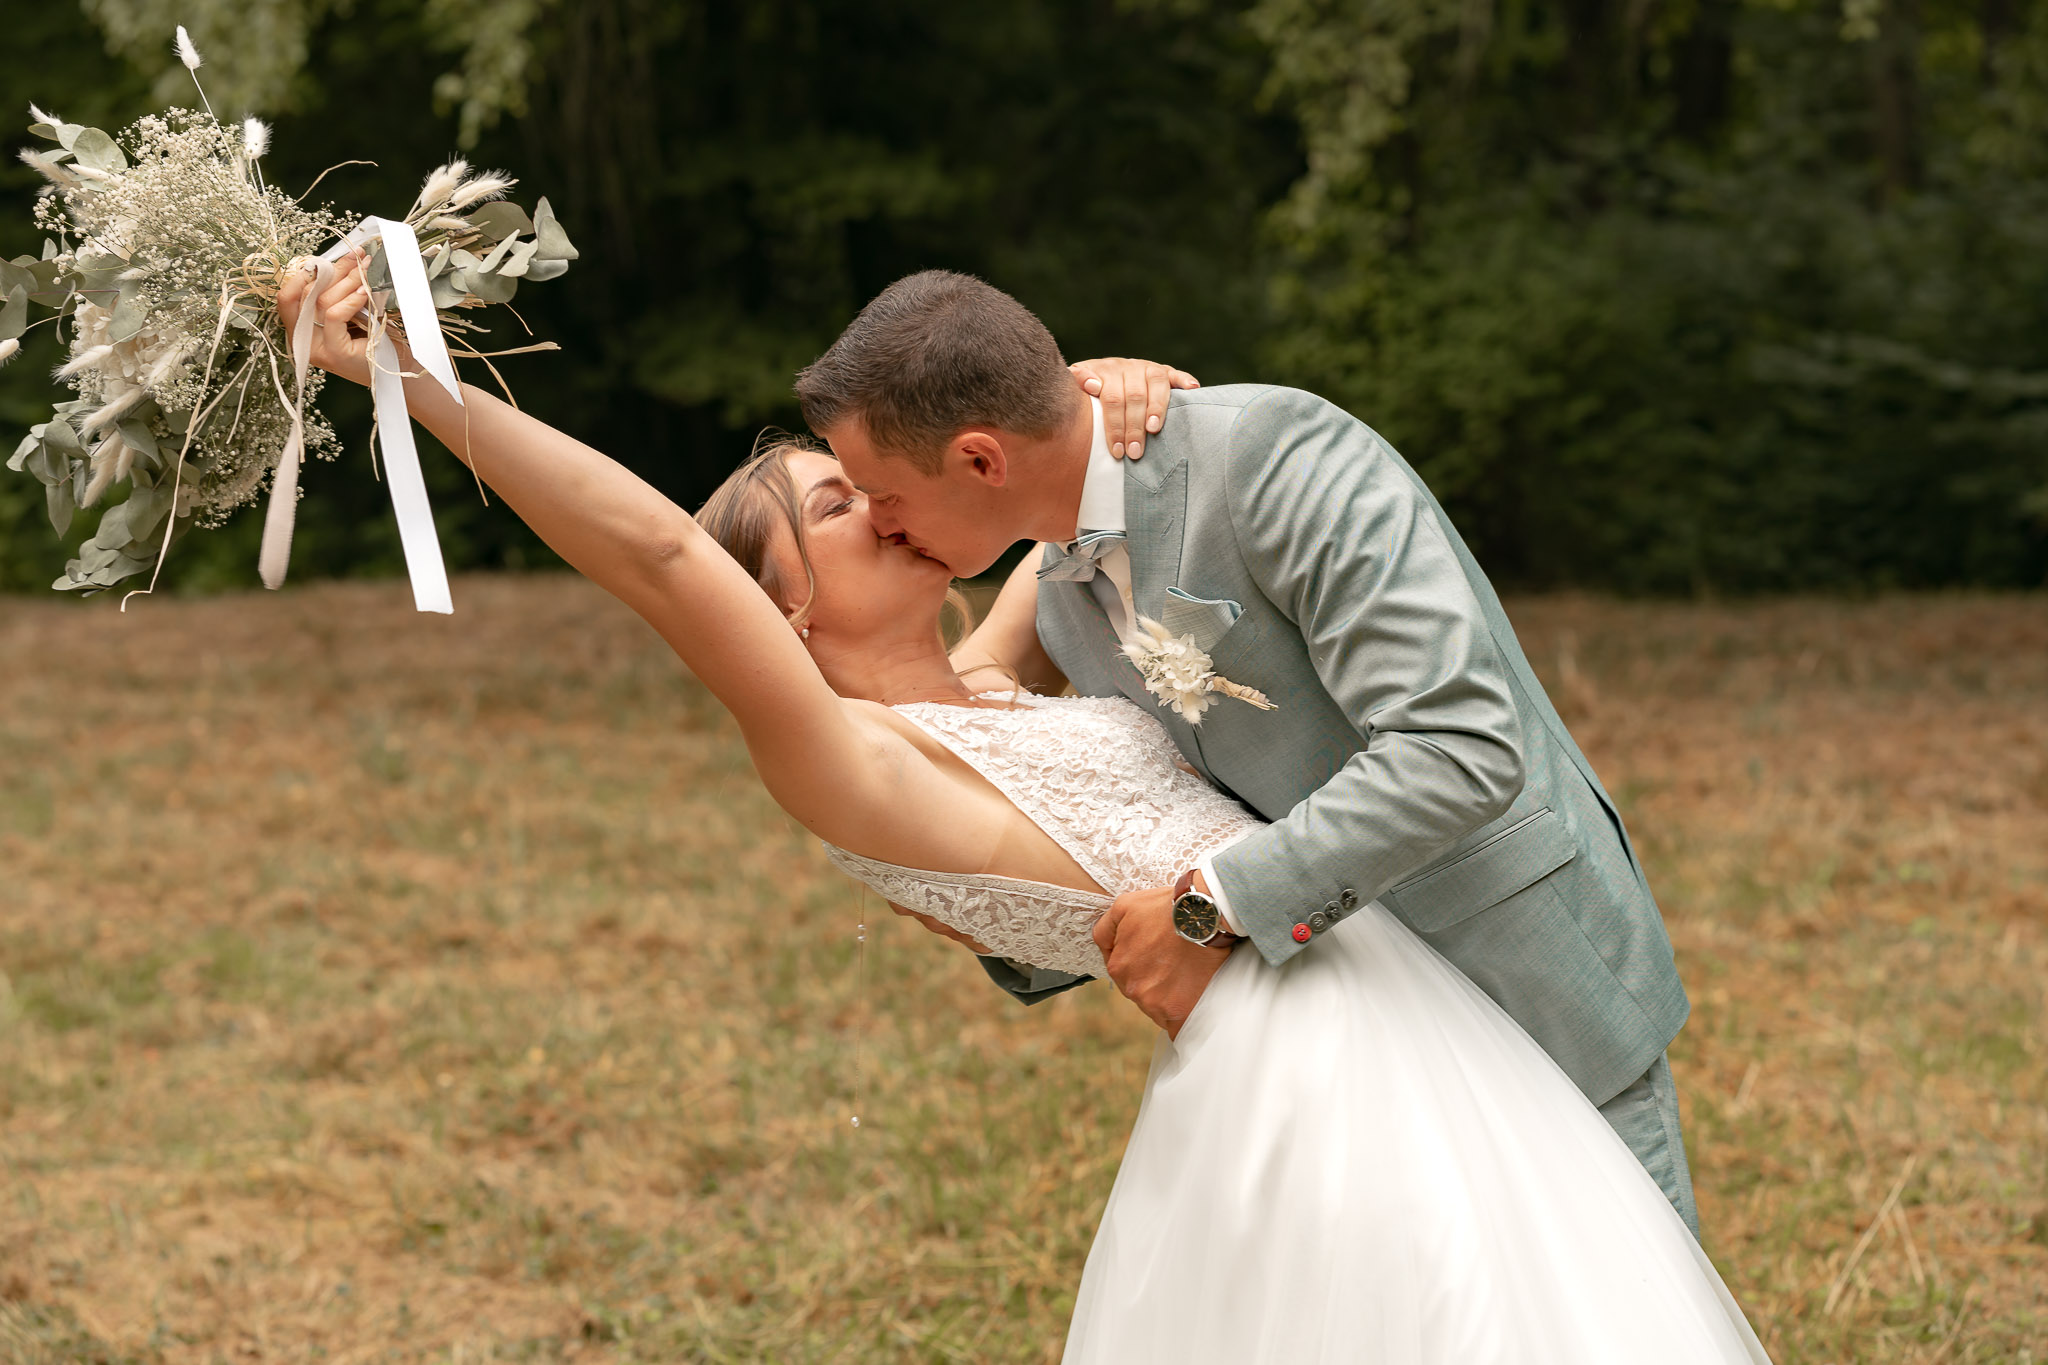 Femme dans sa robe de mariée avec son mari qui la tient tendrement dans un parc